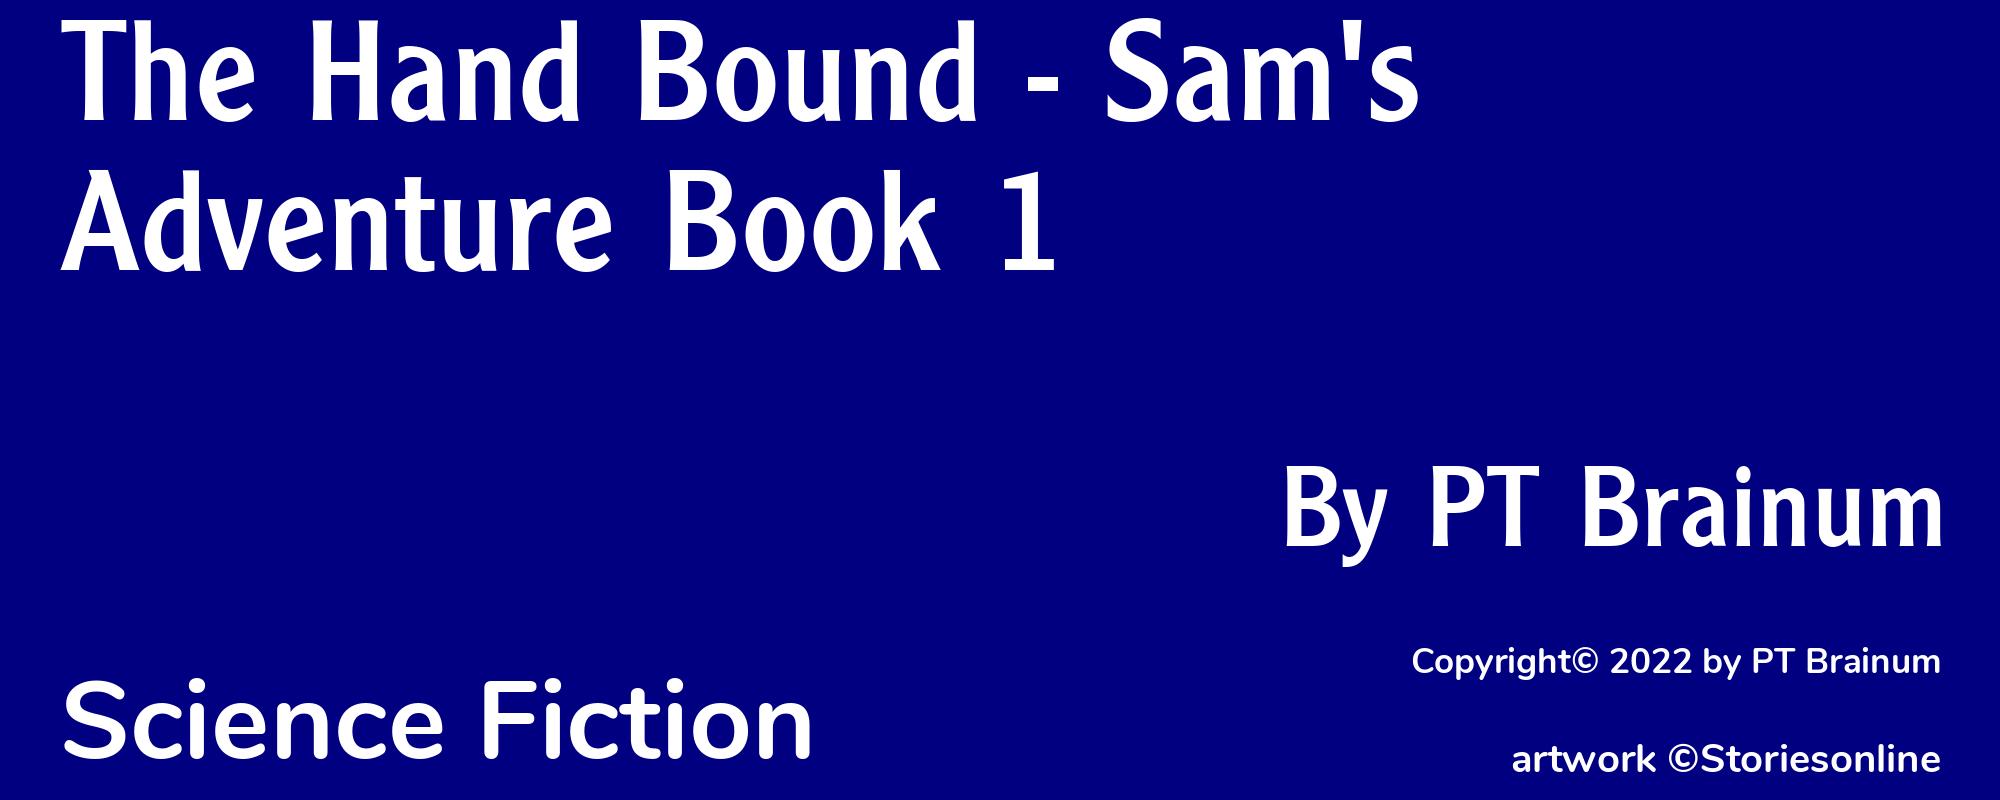 The Hand Bound - Sam's Adventure Book 1 - Cover